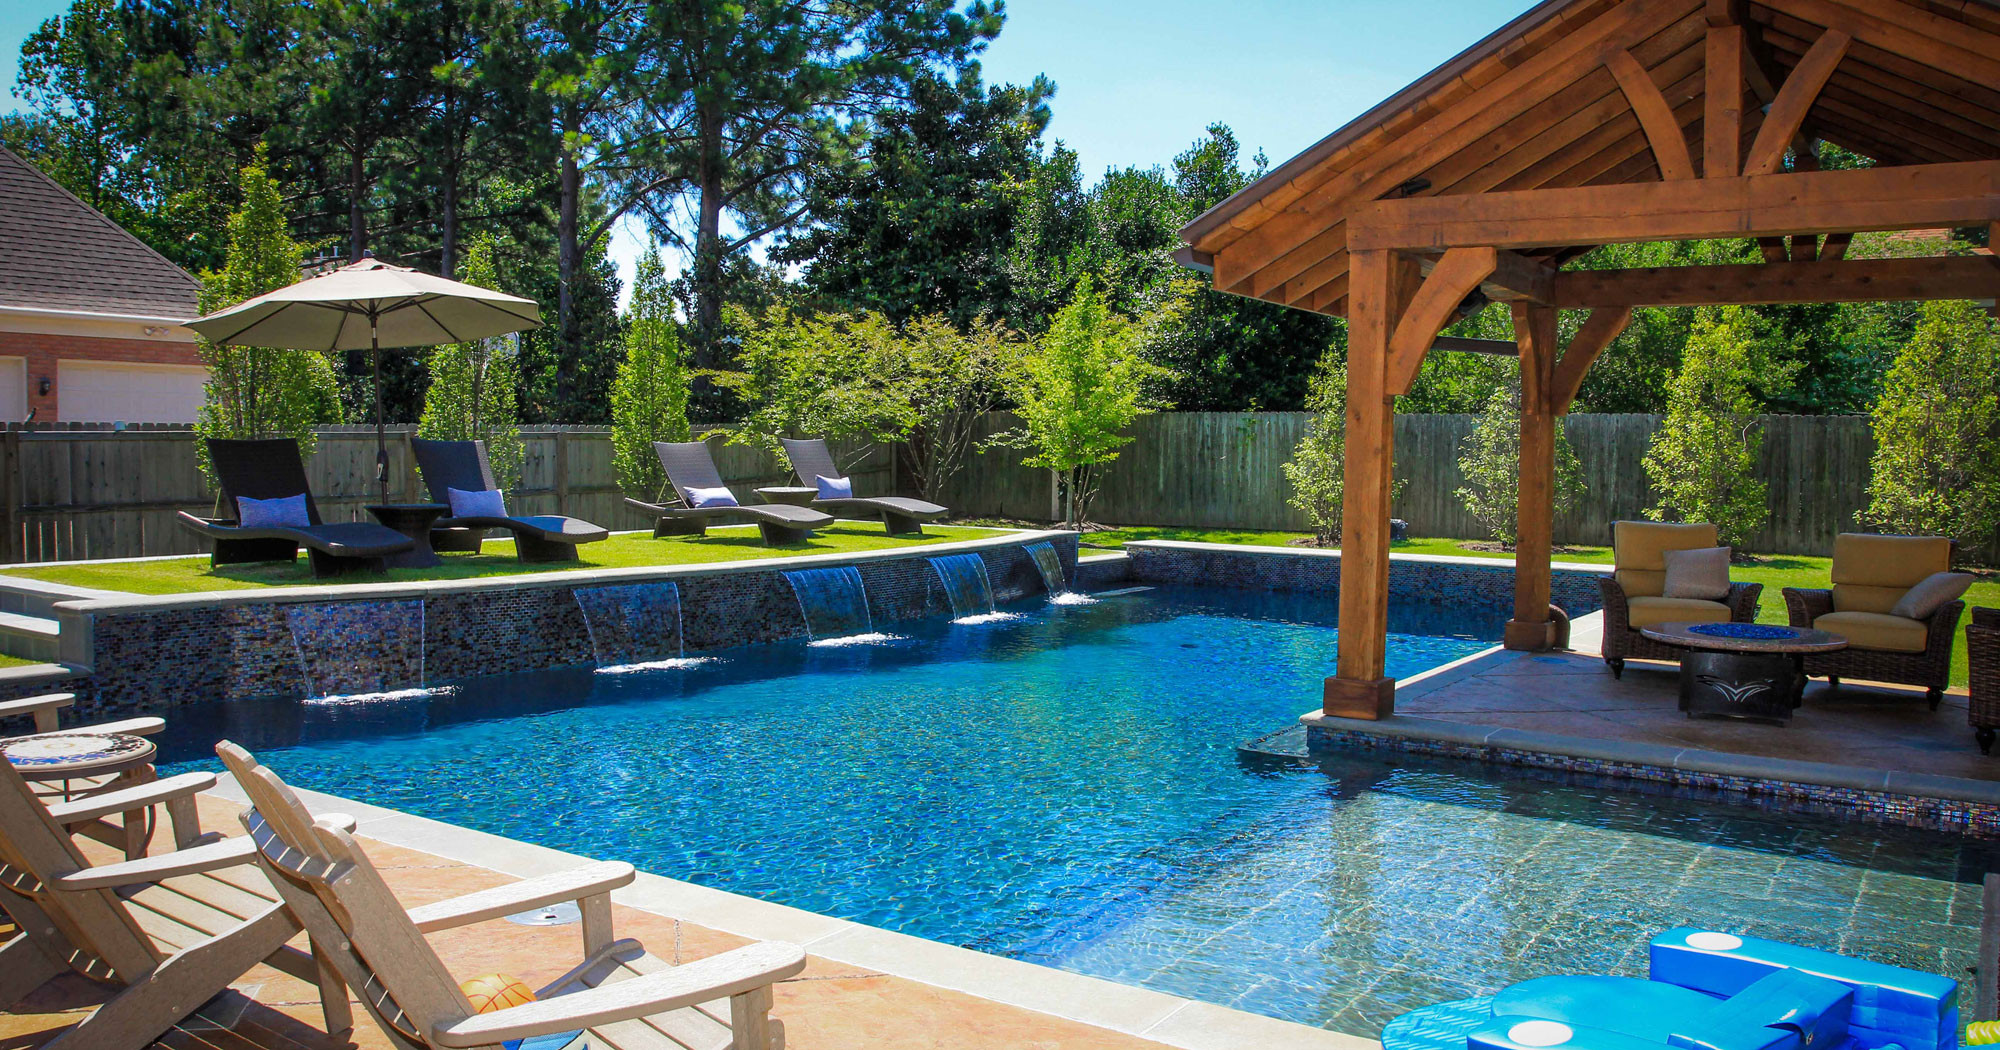 Backyard Pool Ideas
 20 Backyard Pool Ideas for the Wealthy Homeowner